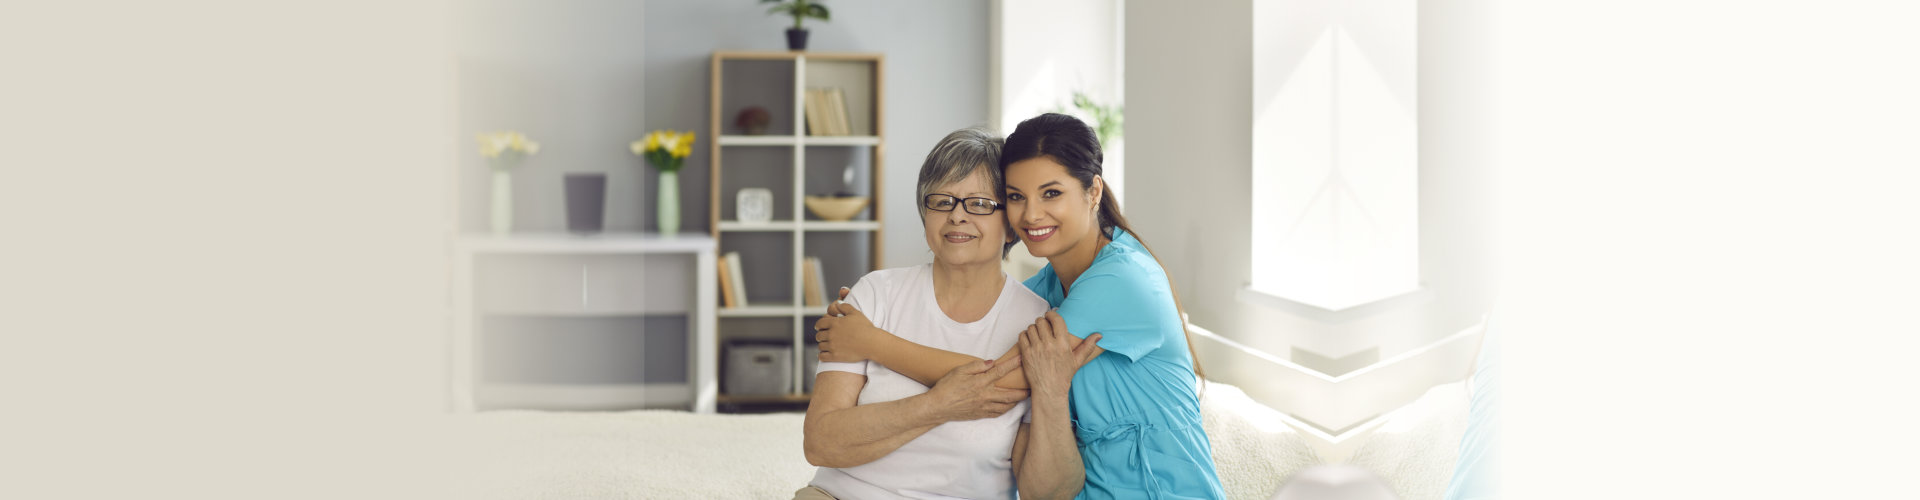 caregiver and elder woman smiling